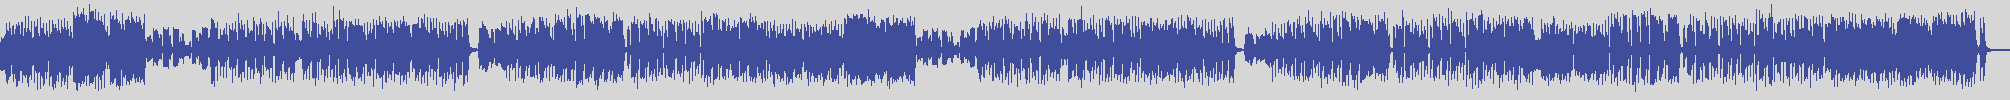 digiphonic_records [DPR011] Orchestra Spettacolo Romagna Folk - Giramondo [Original Mix] audio wave form